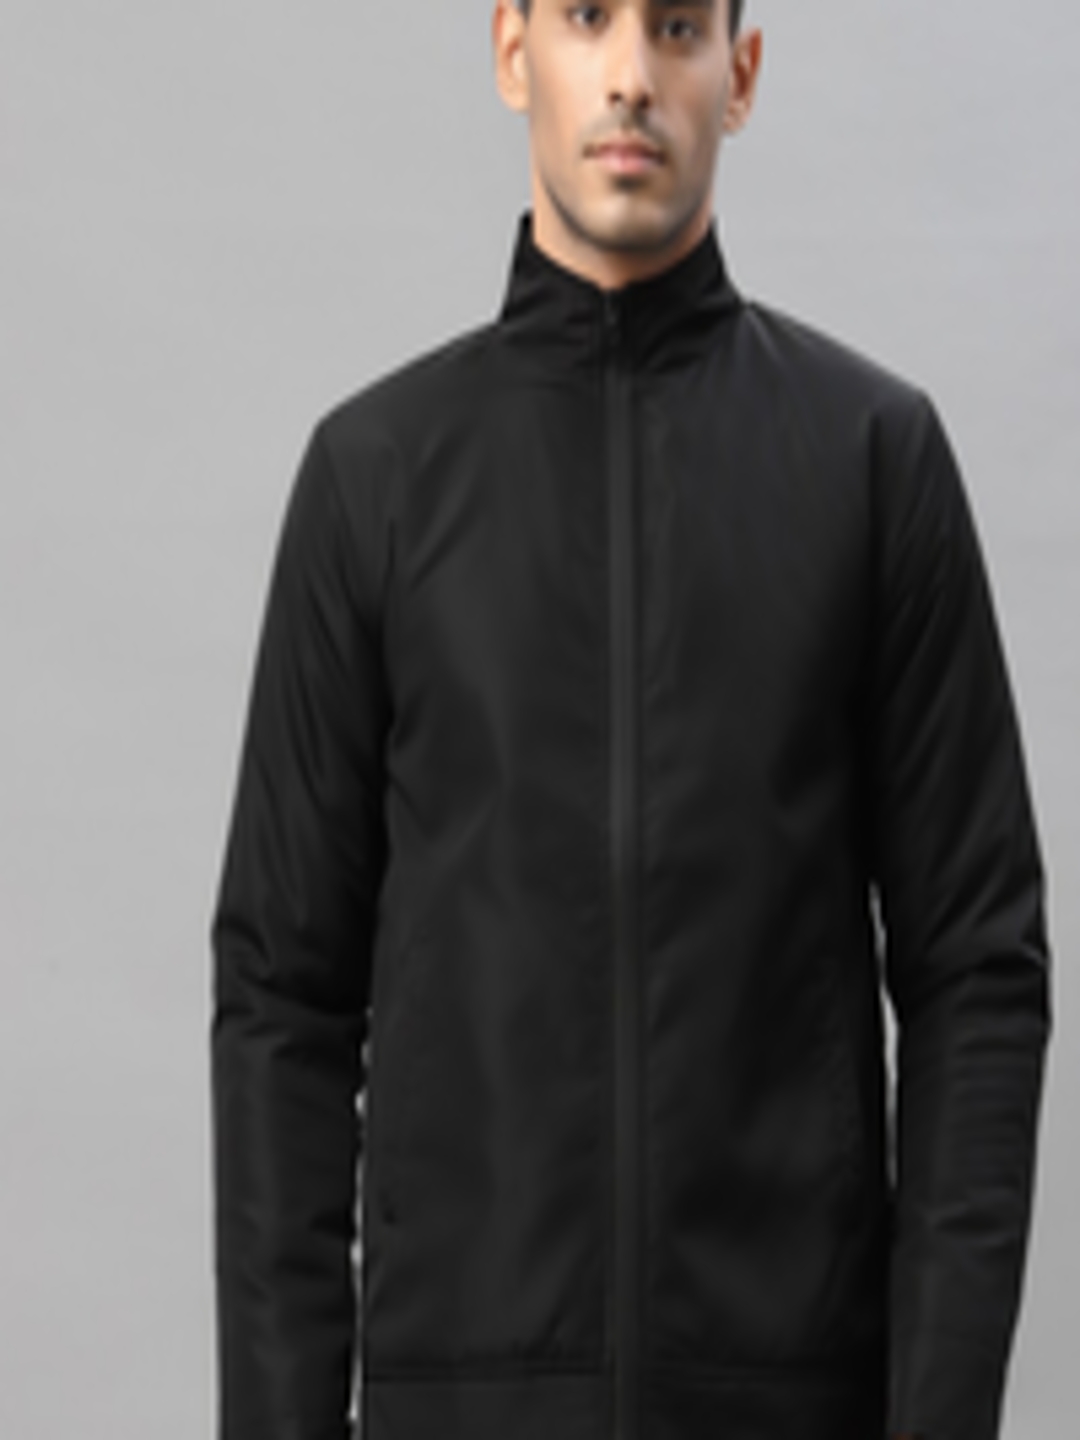 Buy Style Quotient Men Black Tailored Jacket - Jackets for Men 18588510 ...